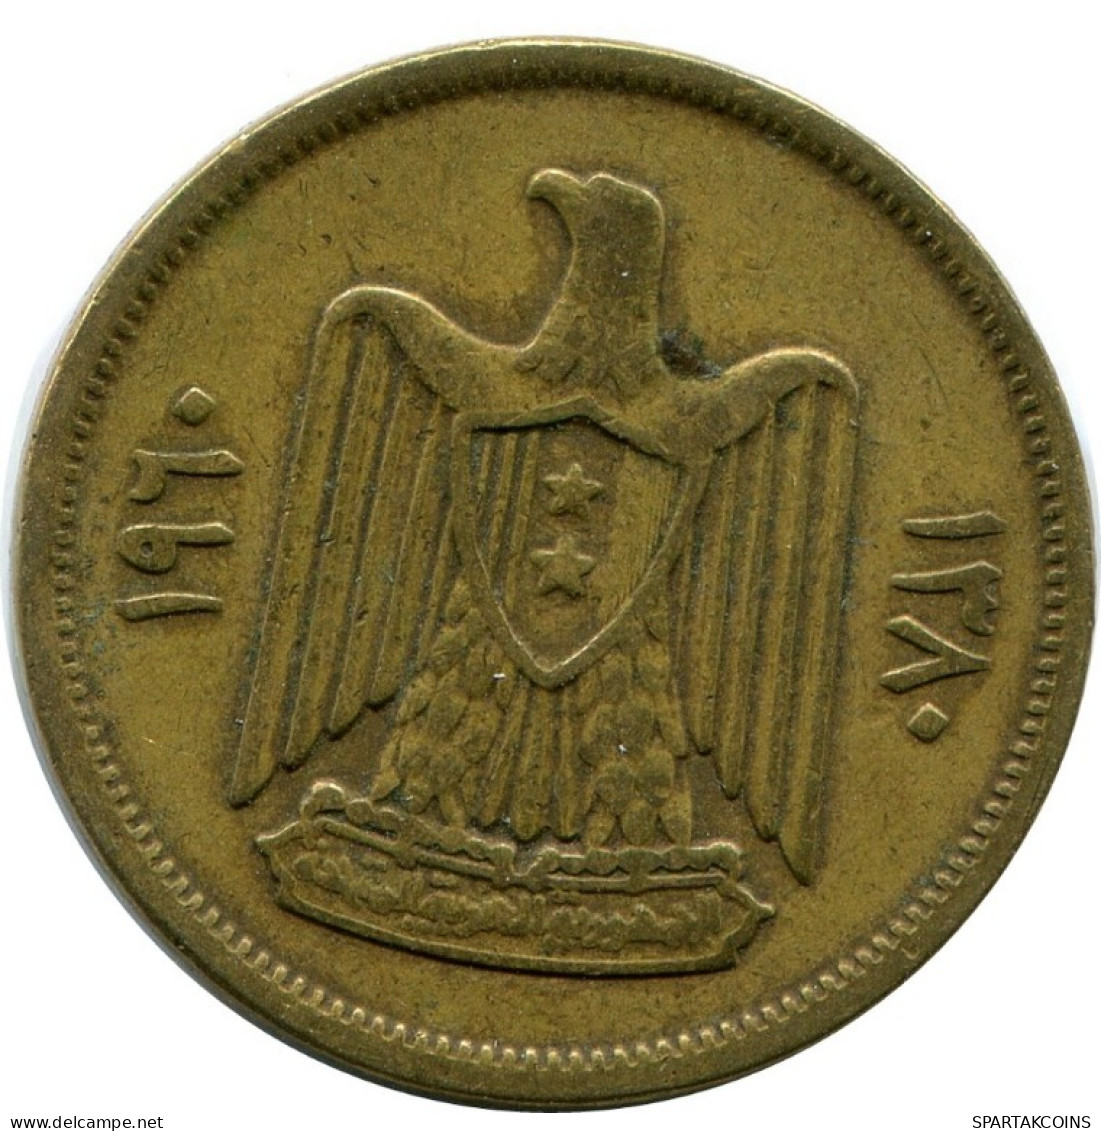 10 QIRSH 1960 SYRIA Islamic Coin #AH959.U.A - Syria